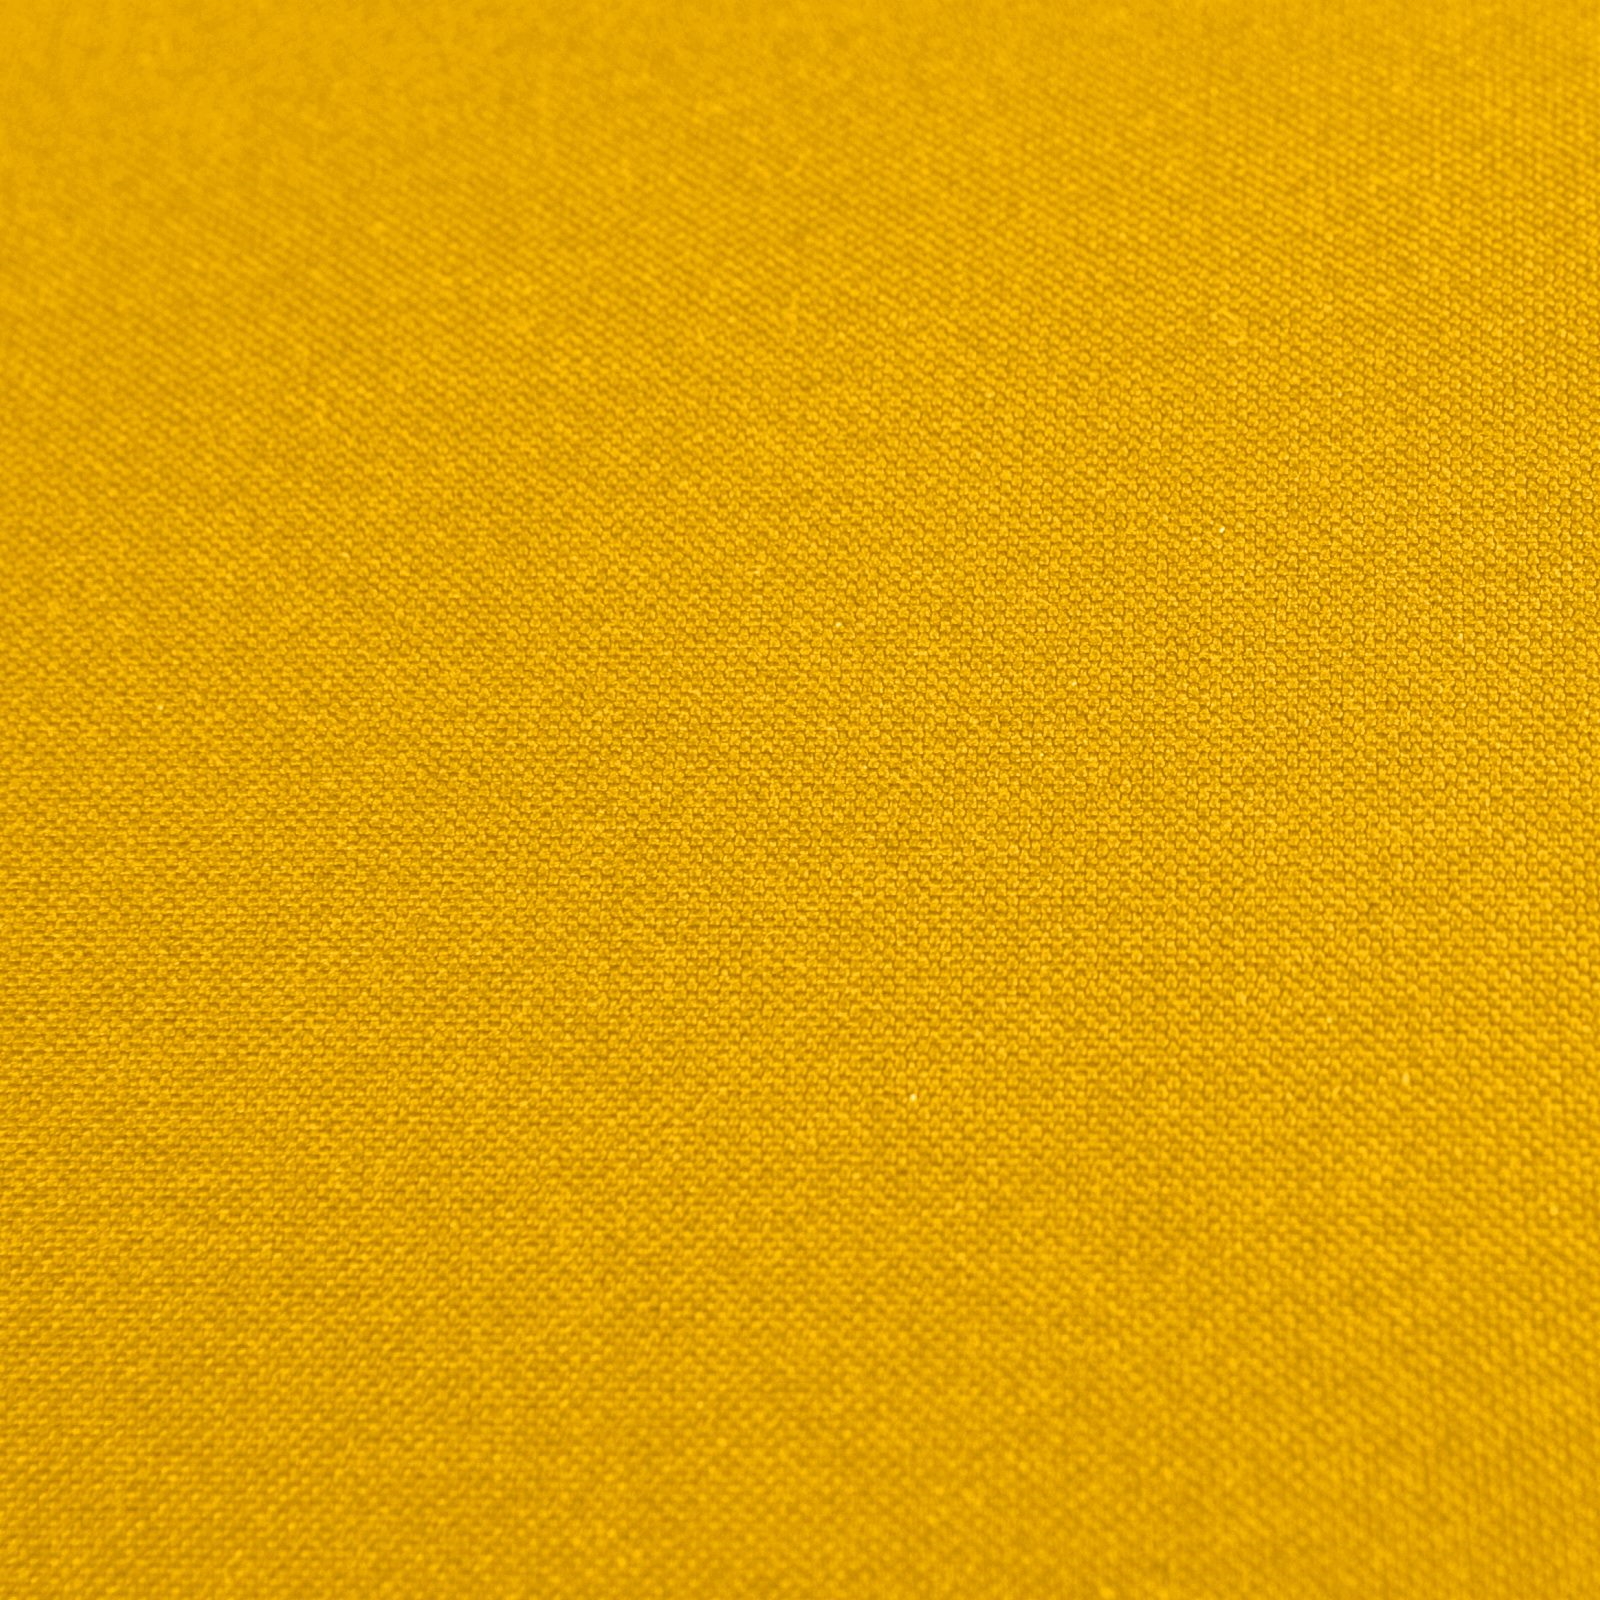 Komplettkissen Polyester-Gelb / 30x30 cm